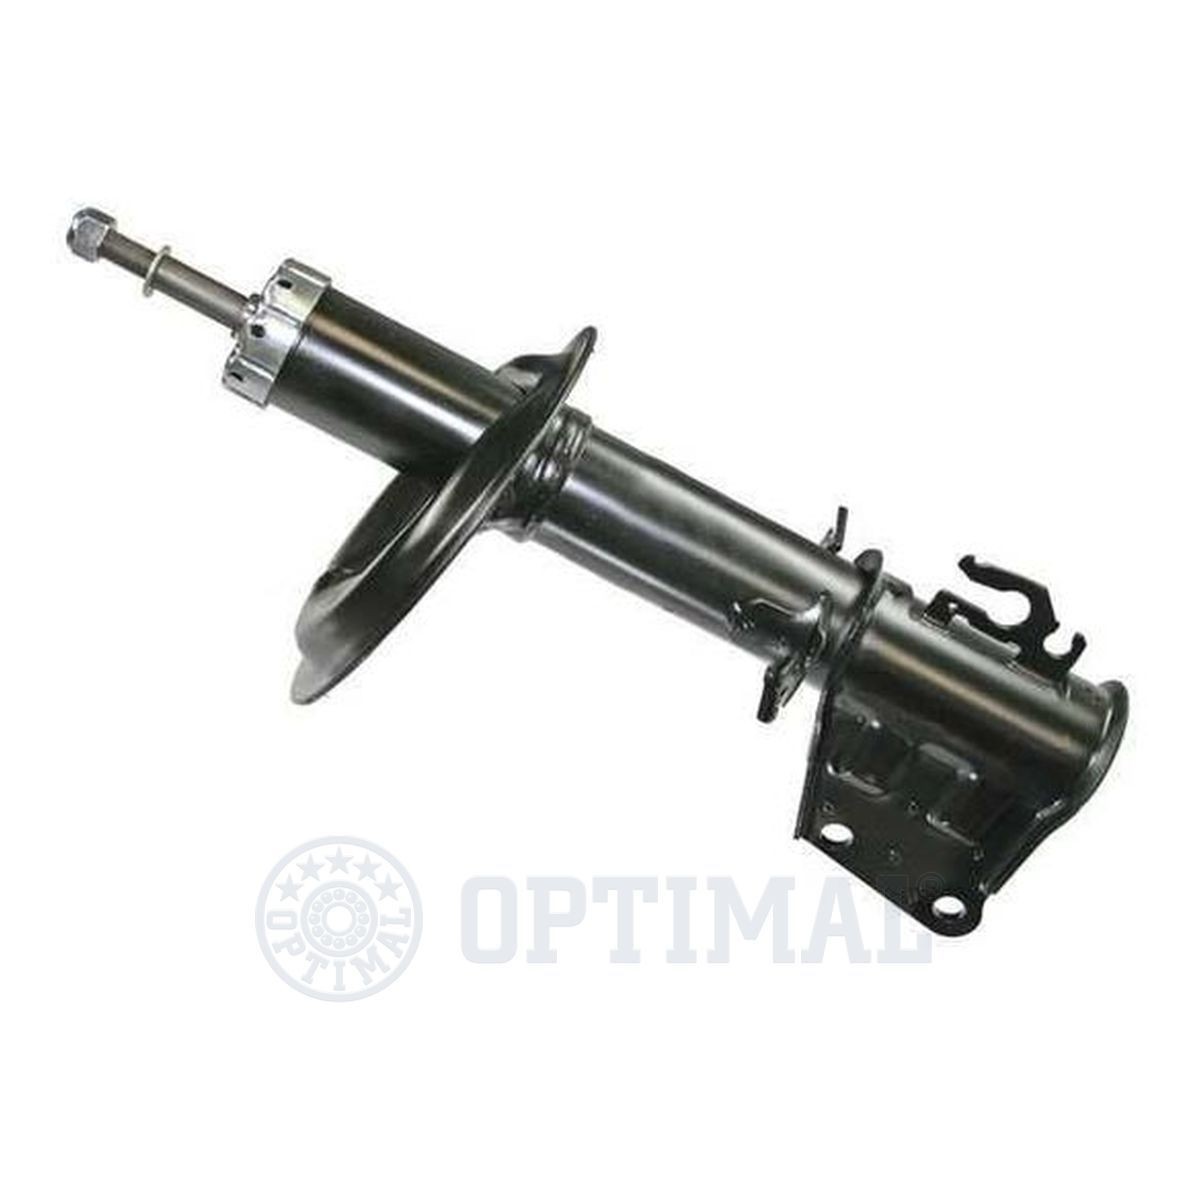 OPTIMAL Front Axle, Oil Pressure, Twin-Tube, Suspension Strut, Spring-bearing Damper, Top pin, Bottom Clamp, M12x1,25 Shocks A-18583H buy